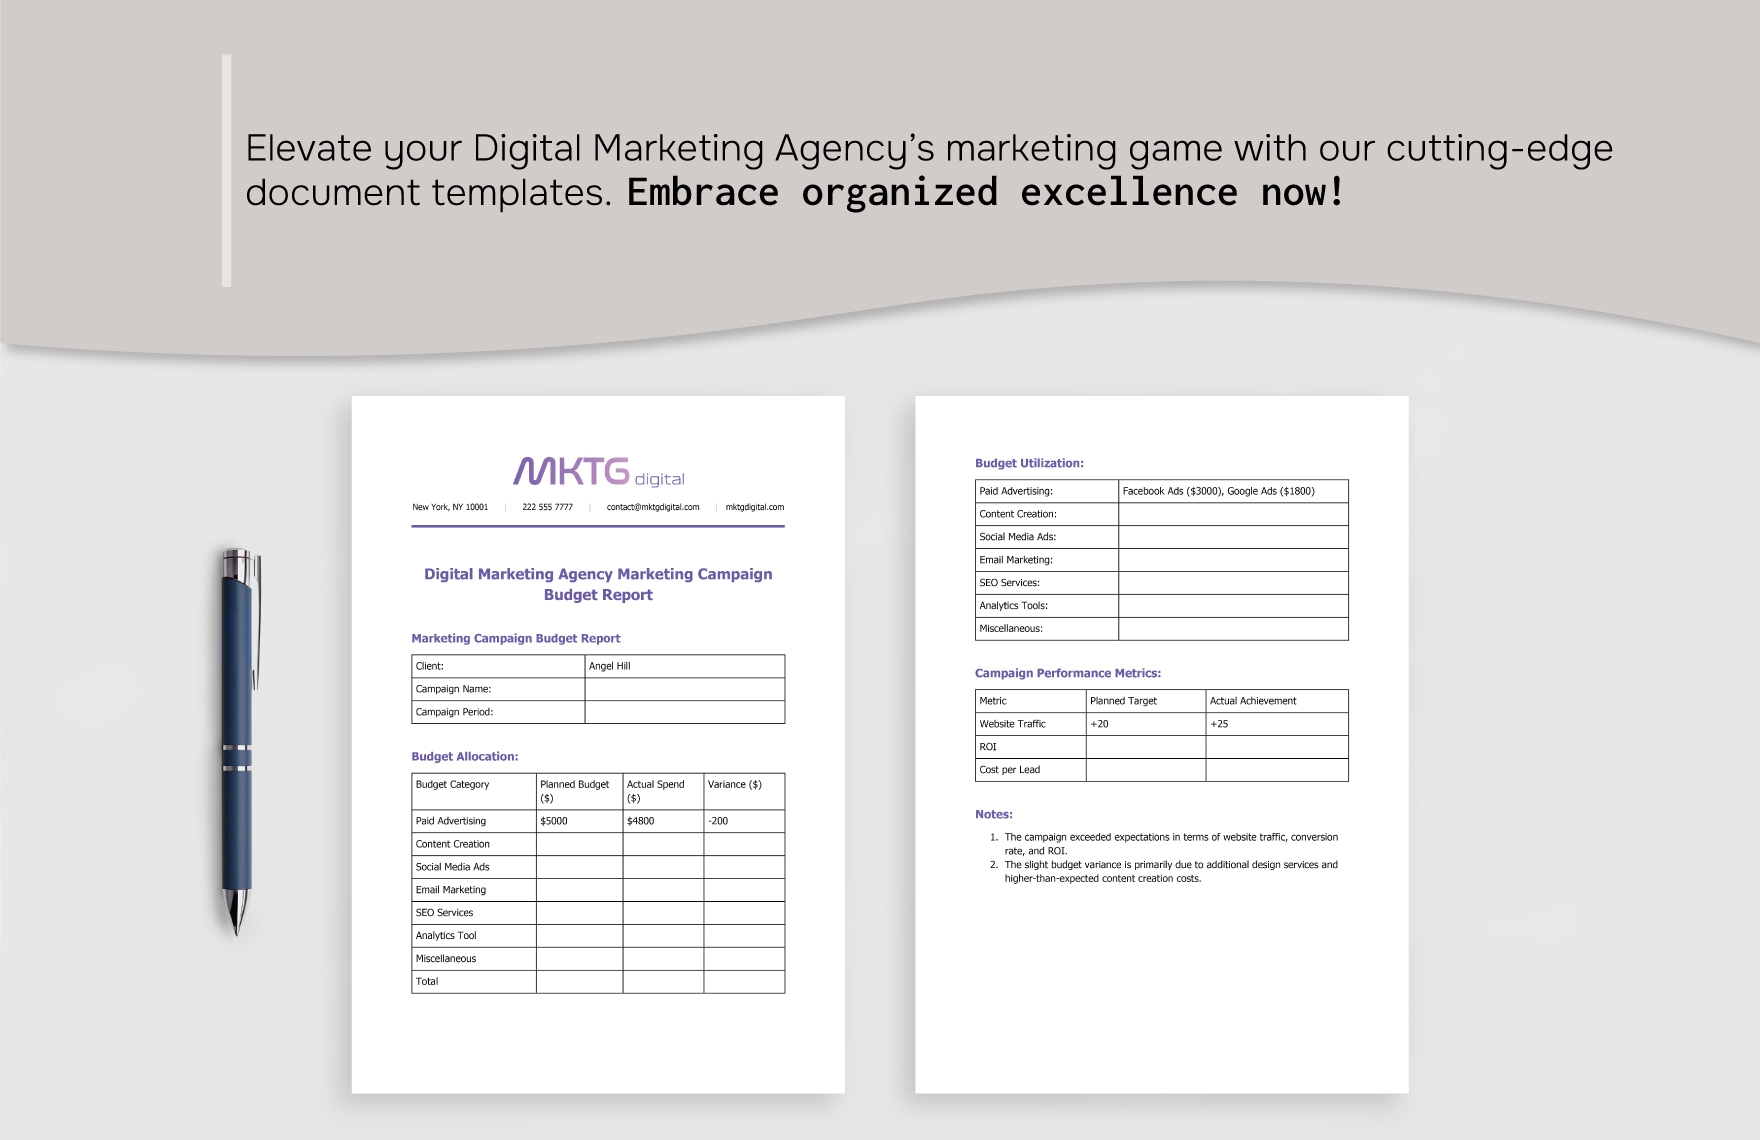 Digital Marketing Agency Marketing Campaign Budget Report Template